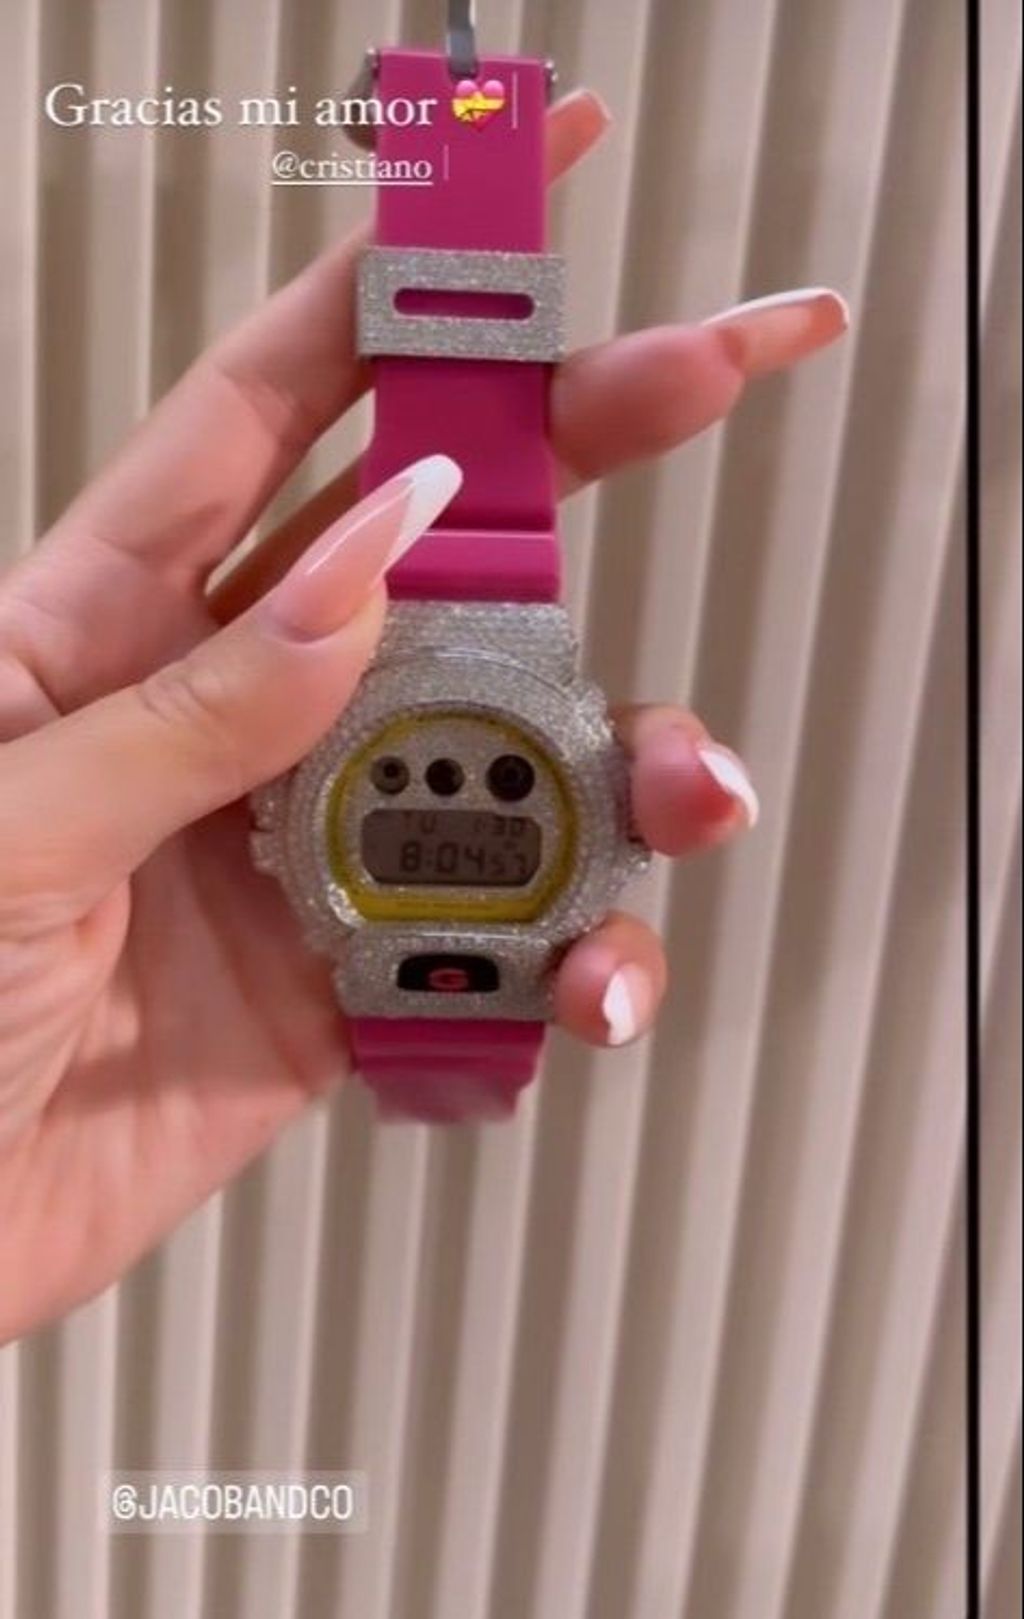 El reloj que Cristiano Ronaldo ha regalado a Georgina Rodríguez